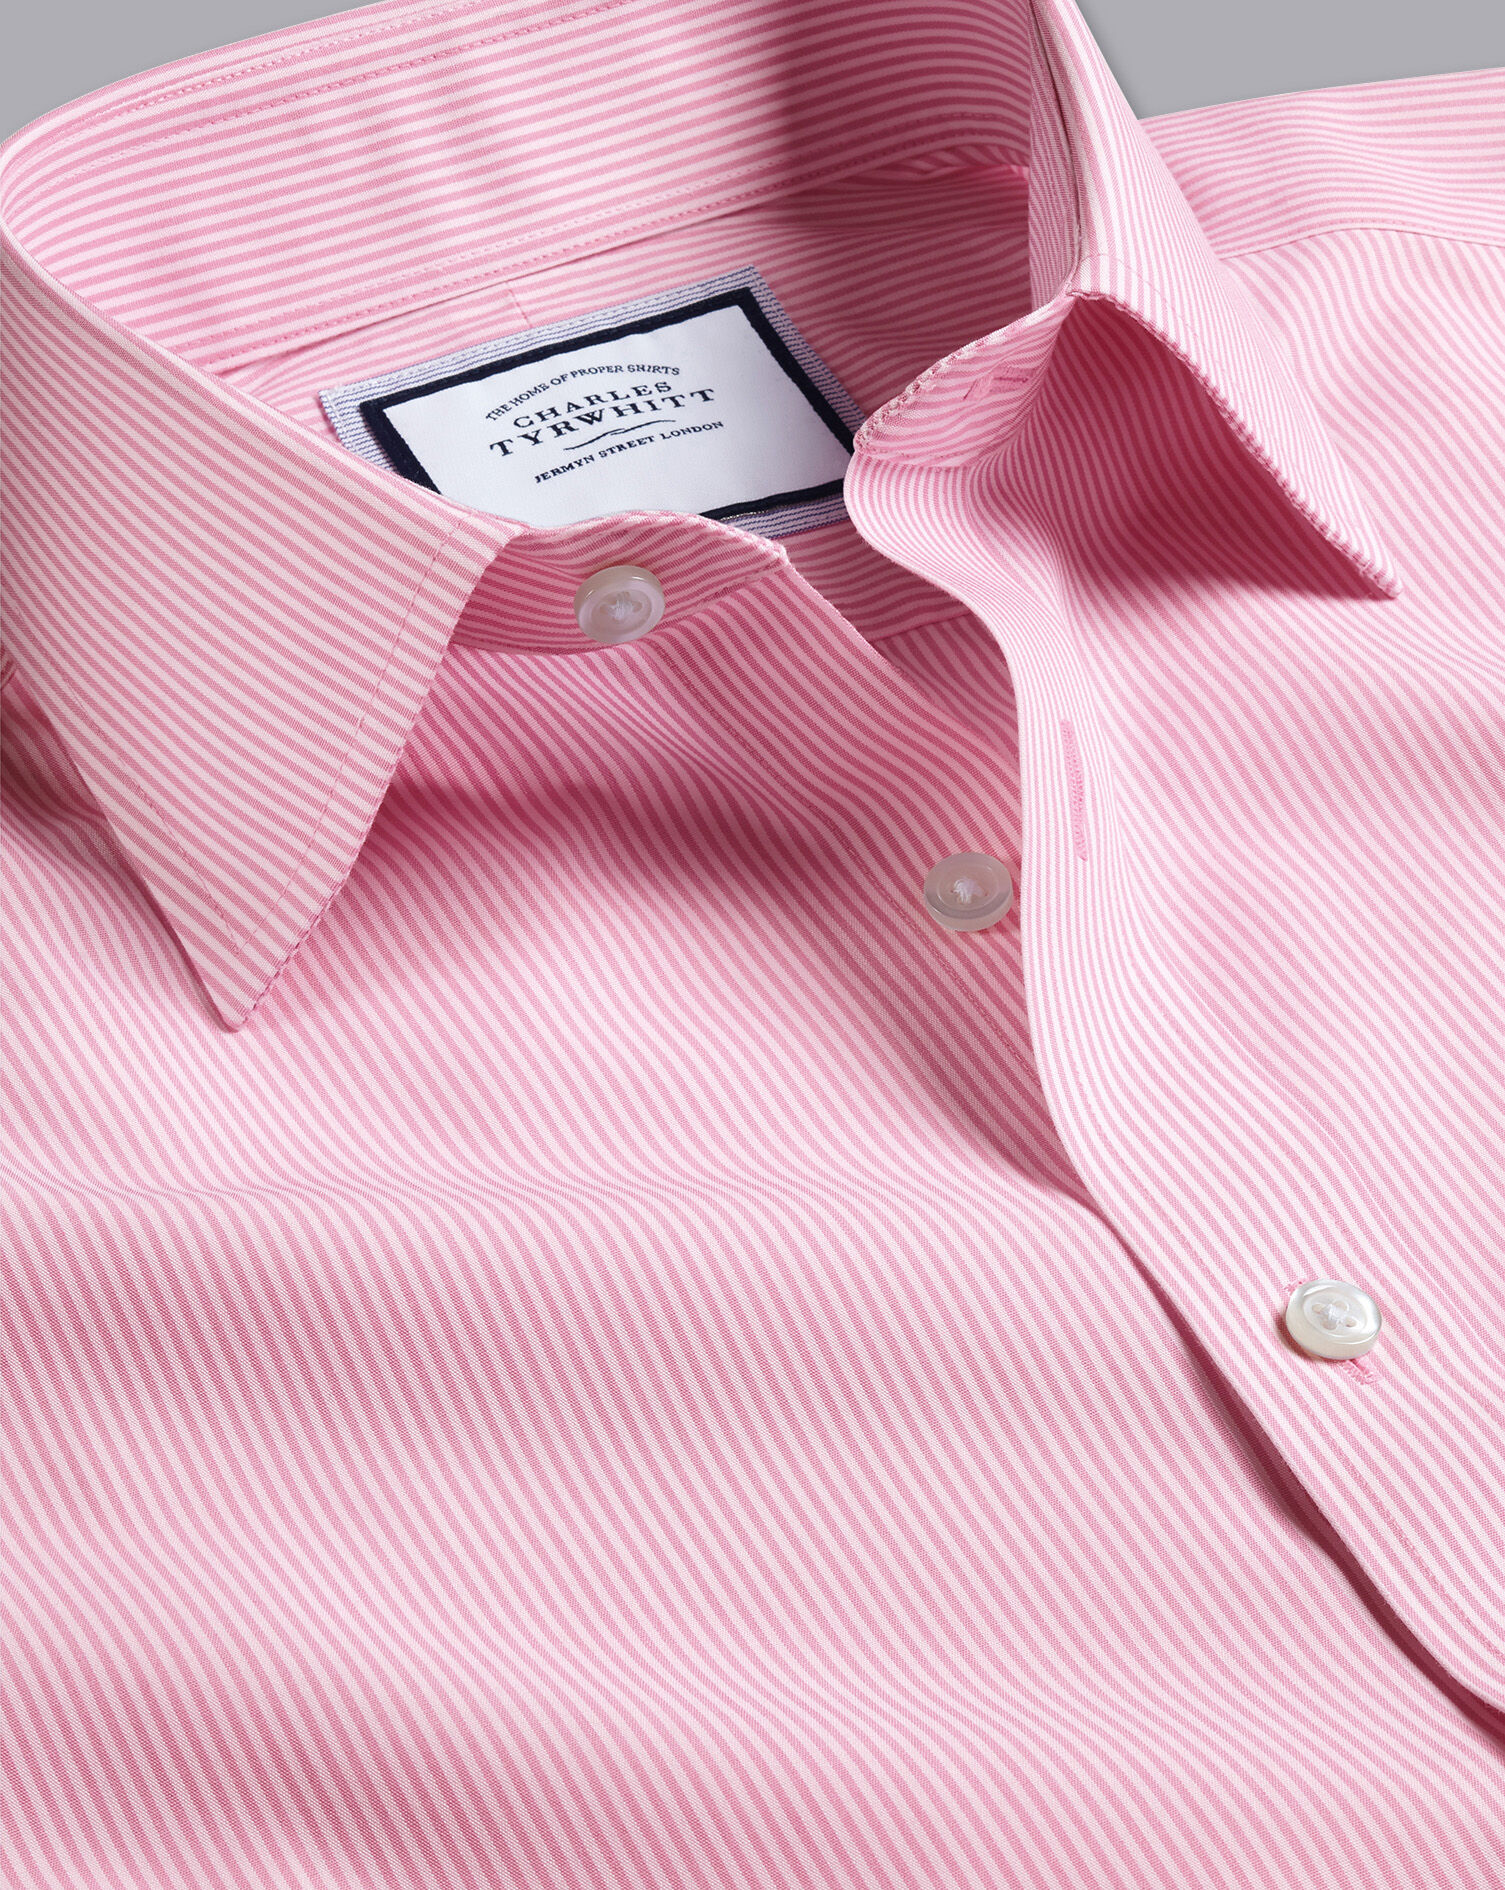 Charles Tyrwhitt Charles Tyrwhitt Mens Shirt Long Sleeve XL Collar 17 Pink 100% Cotton 